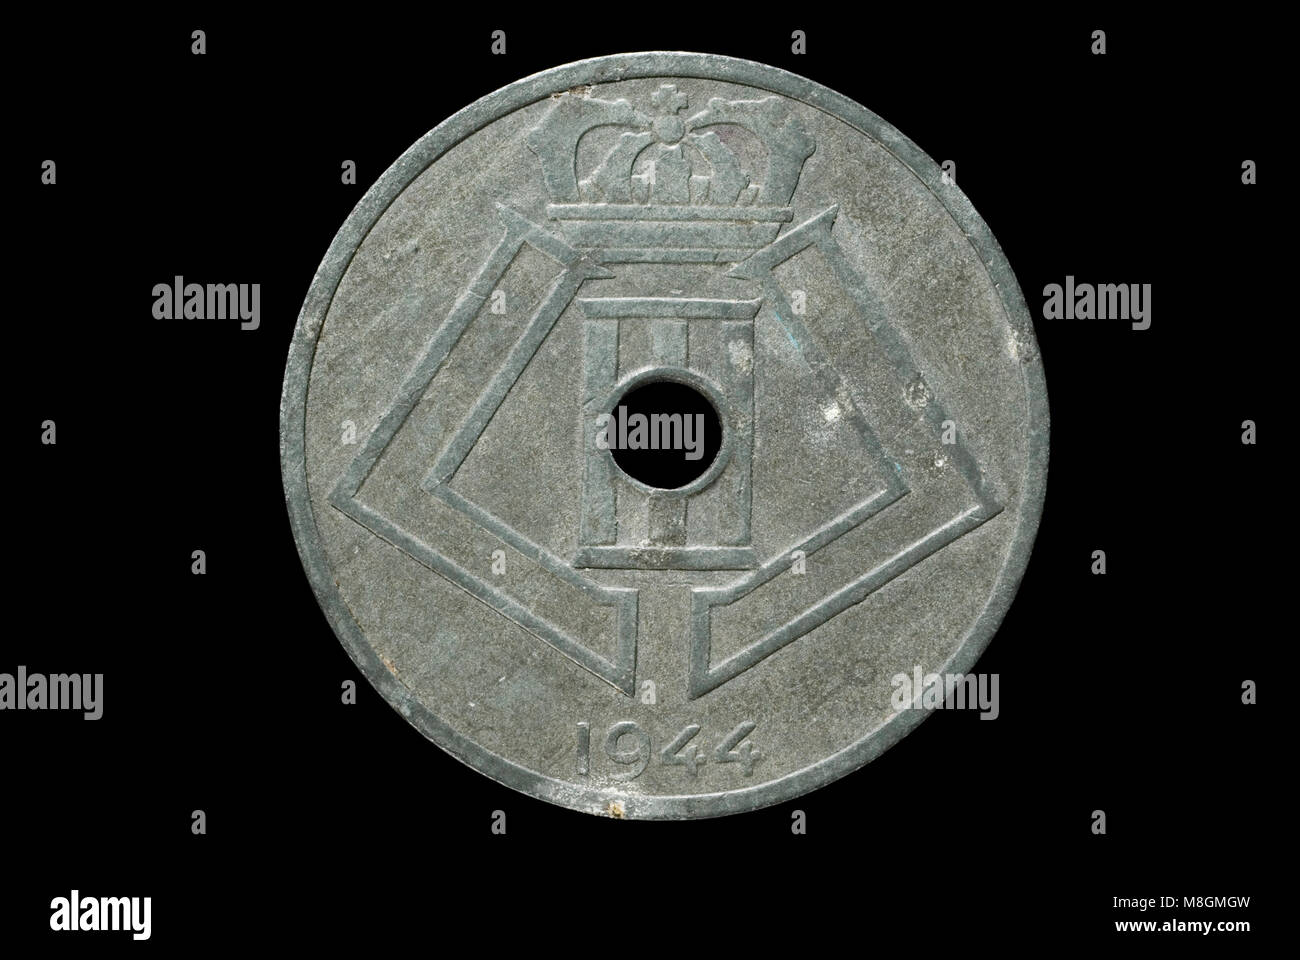 BElgium 25 Centimes 1944 Stock Photo